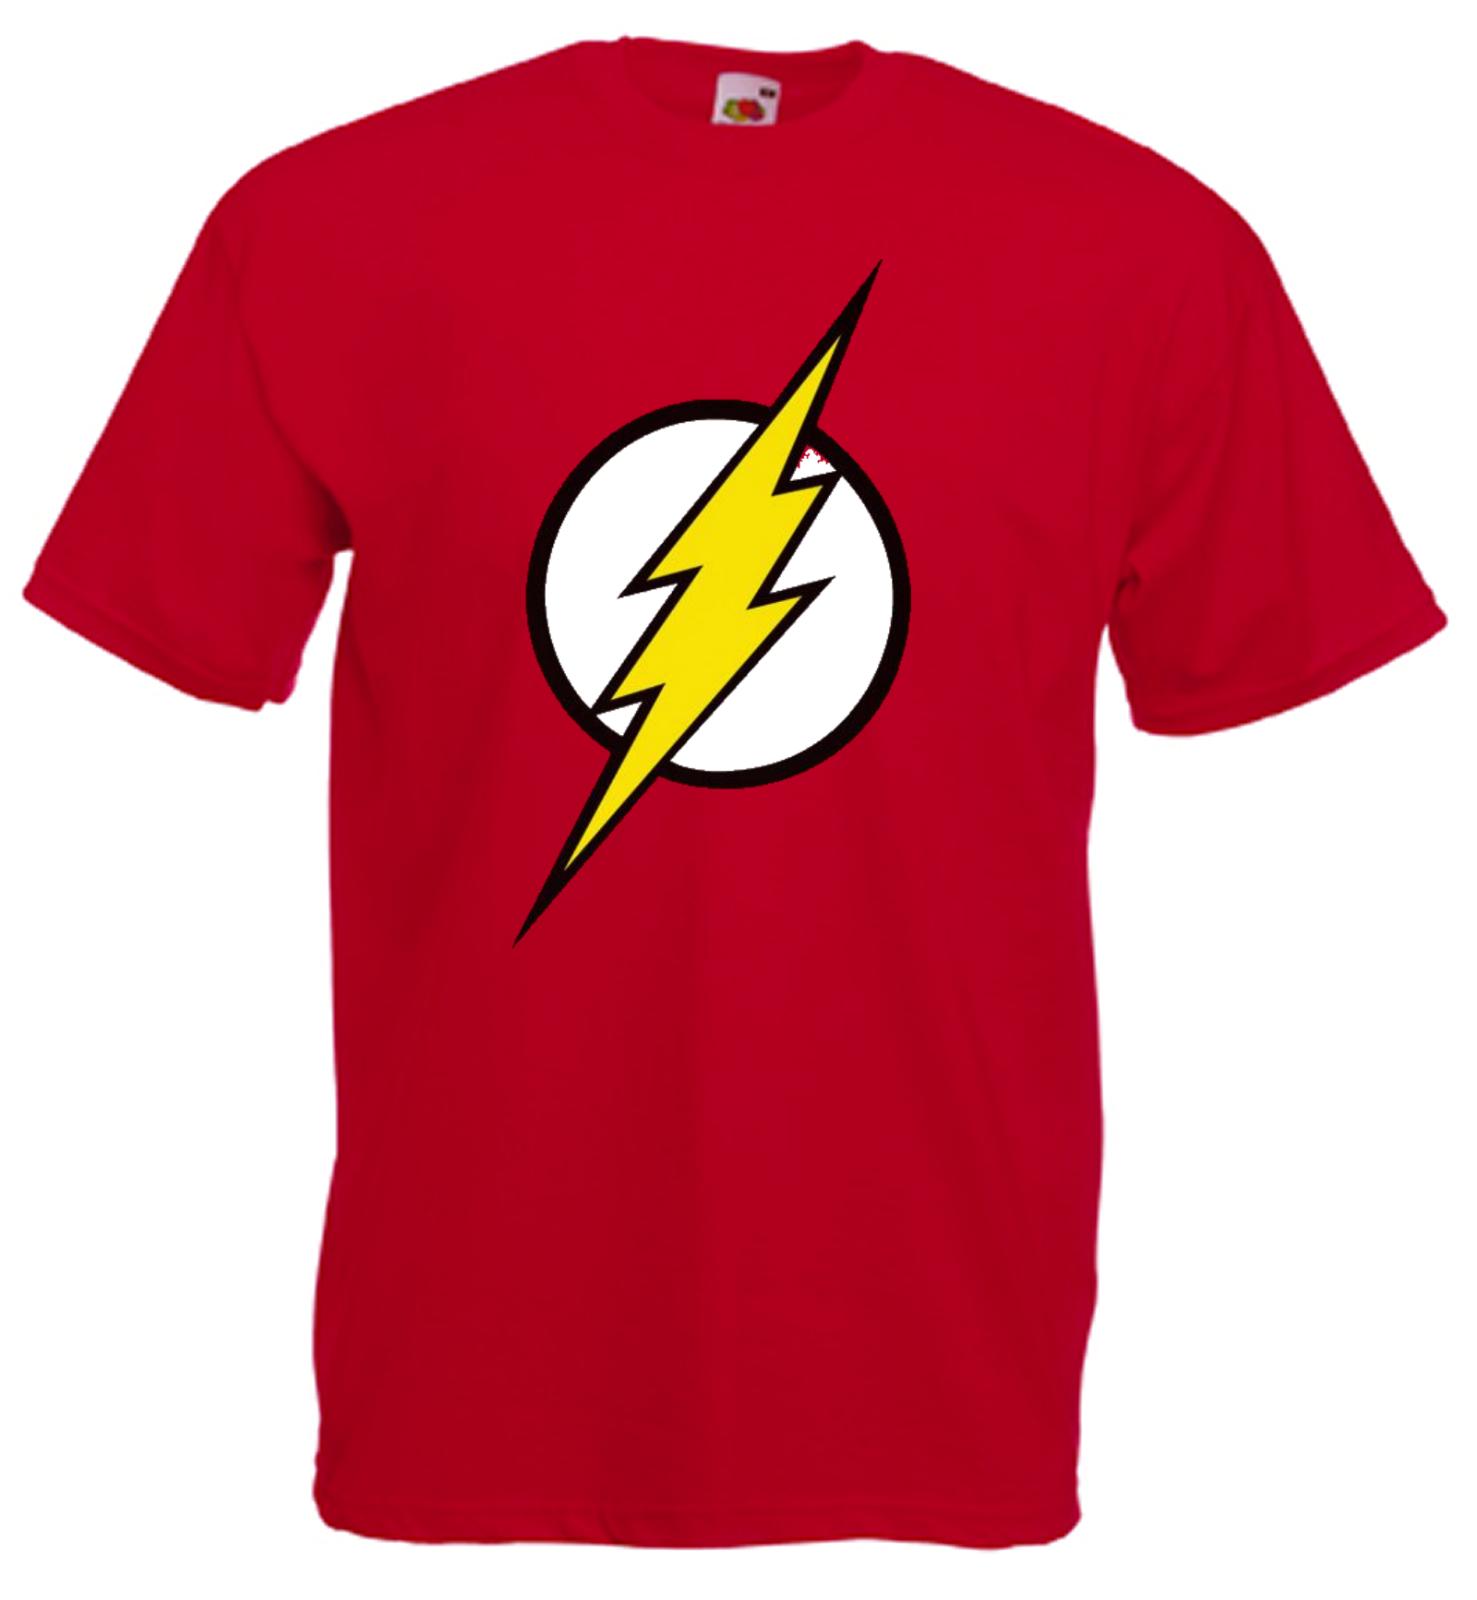 Flsh Logo - Flash logo T Shirt Vest Sweatshirt Hoodie Hoody Strappy Top Loose or  Ladyfit Cool Casual pride t shirt men Unisex